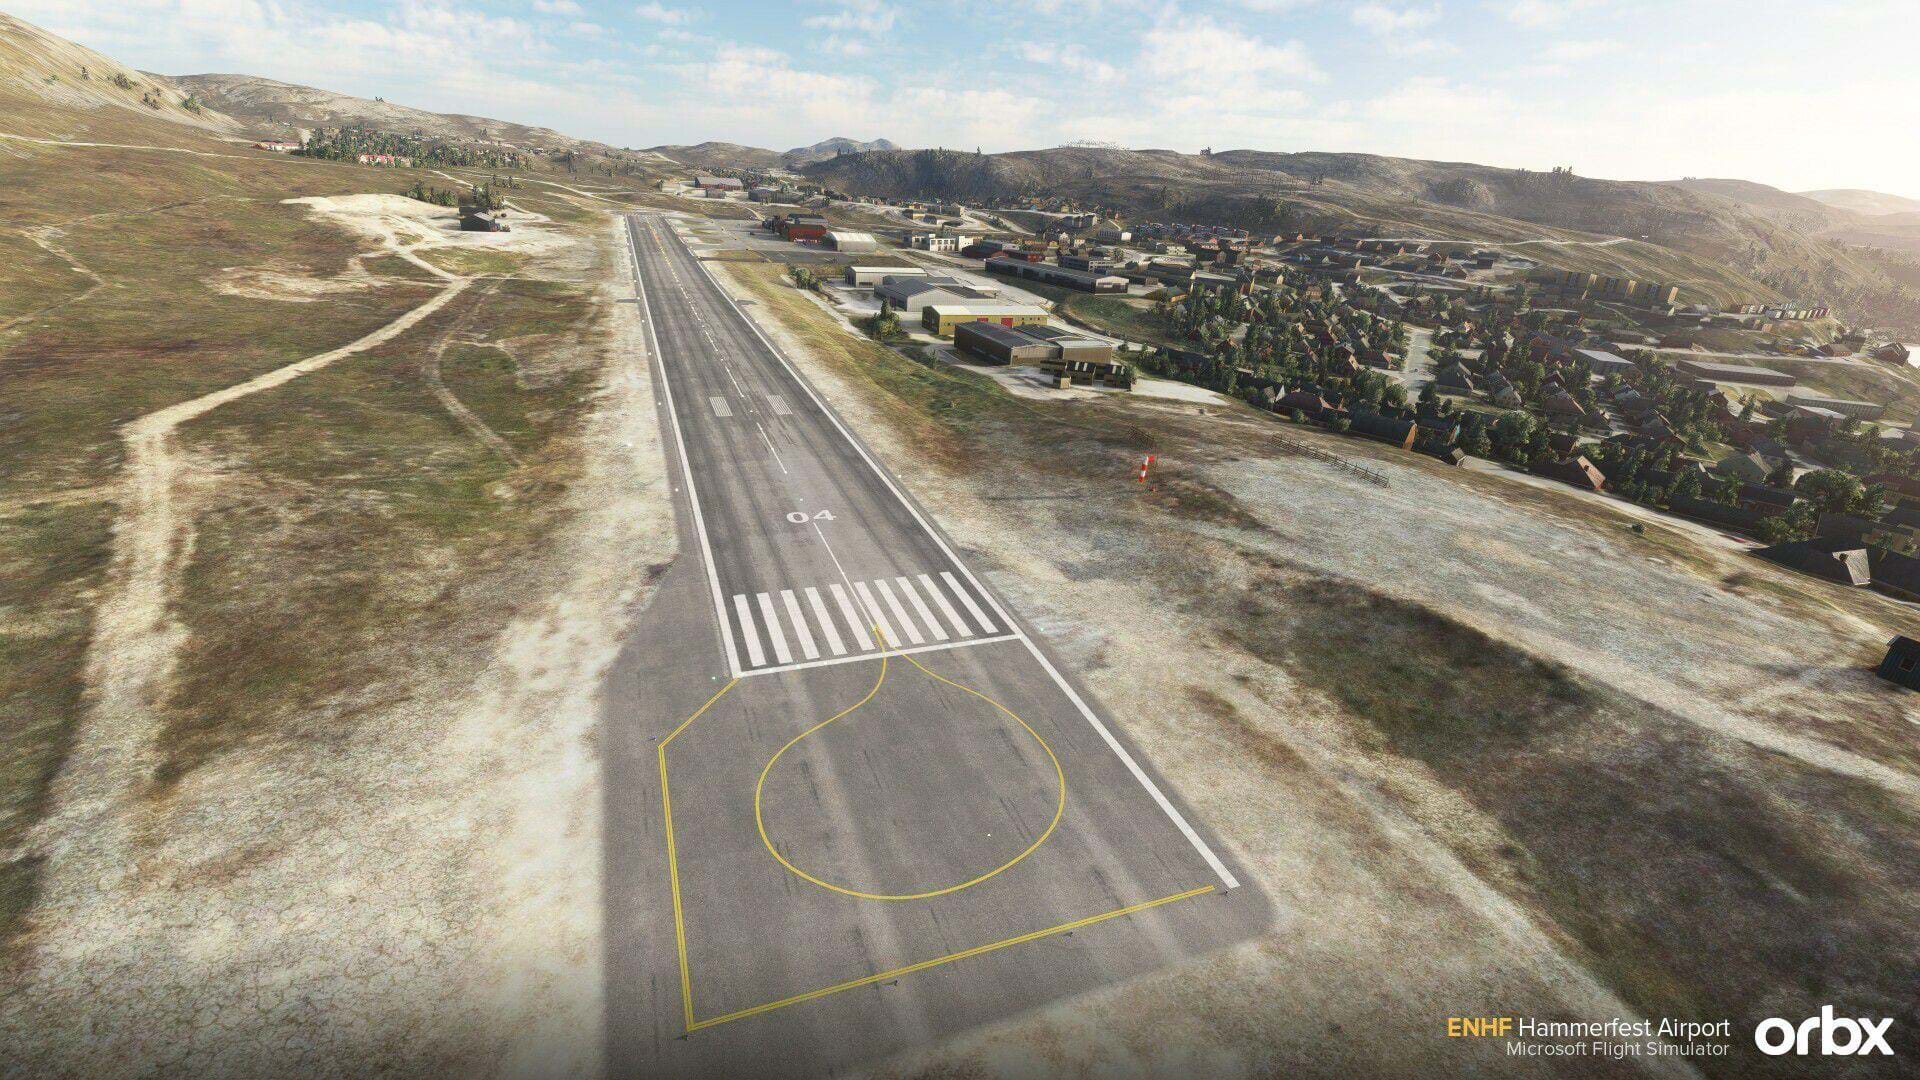 ORBX ENHF Hammerfest Airport for Microsoft Flight Simulator